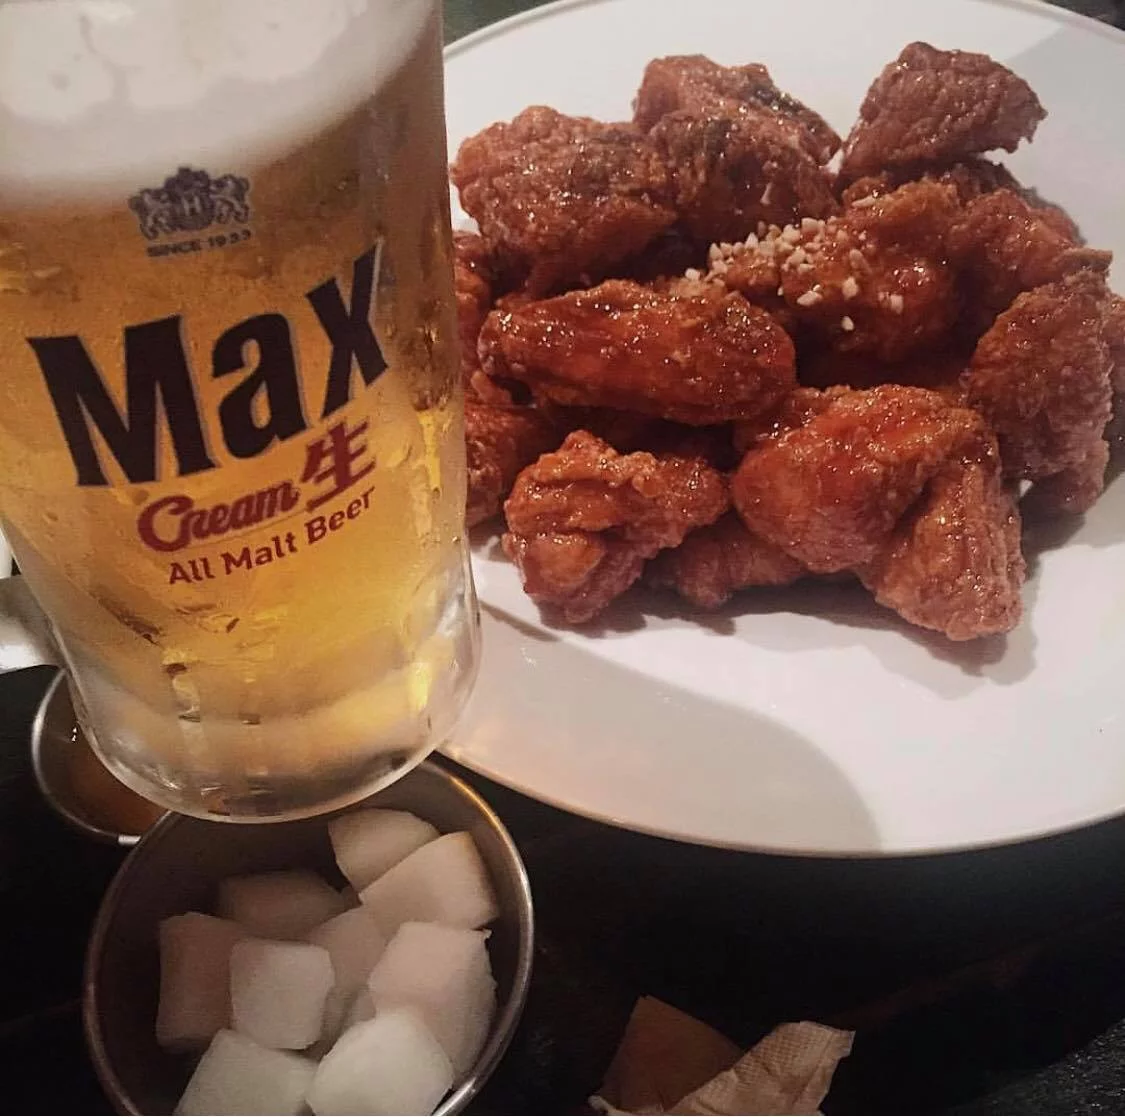 koreaans voedsel kip chimaek bier best populair